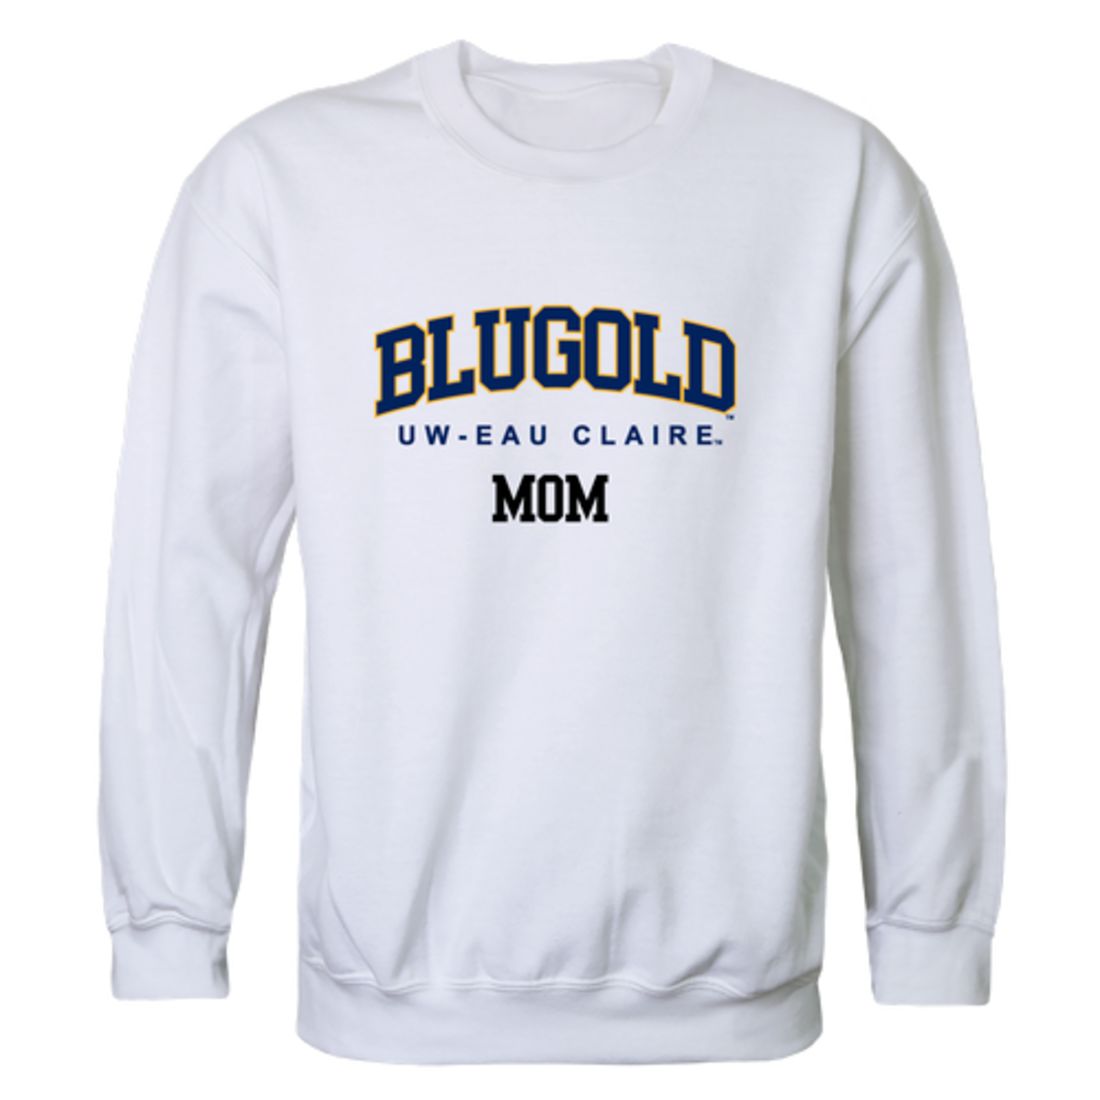 UWEC University of Wisconsin-Eau Claire Blugolds Mom Fleece Crewneck Pullover Sweatshirt Heather Grey Small-Campus-Wardrobe